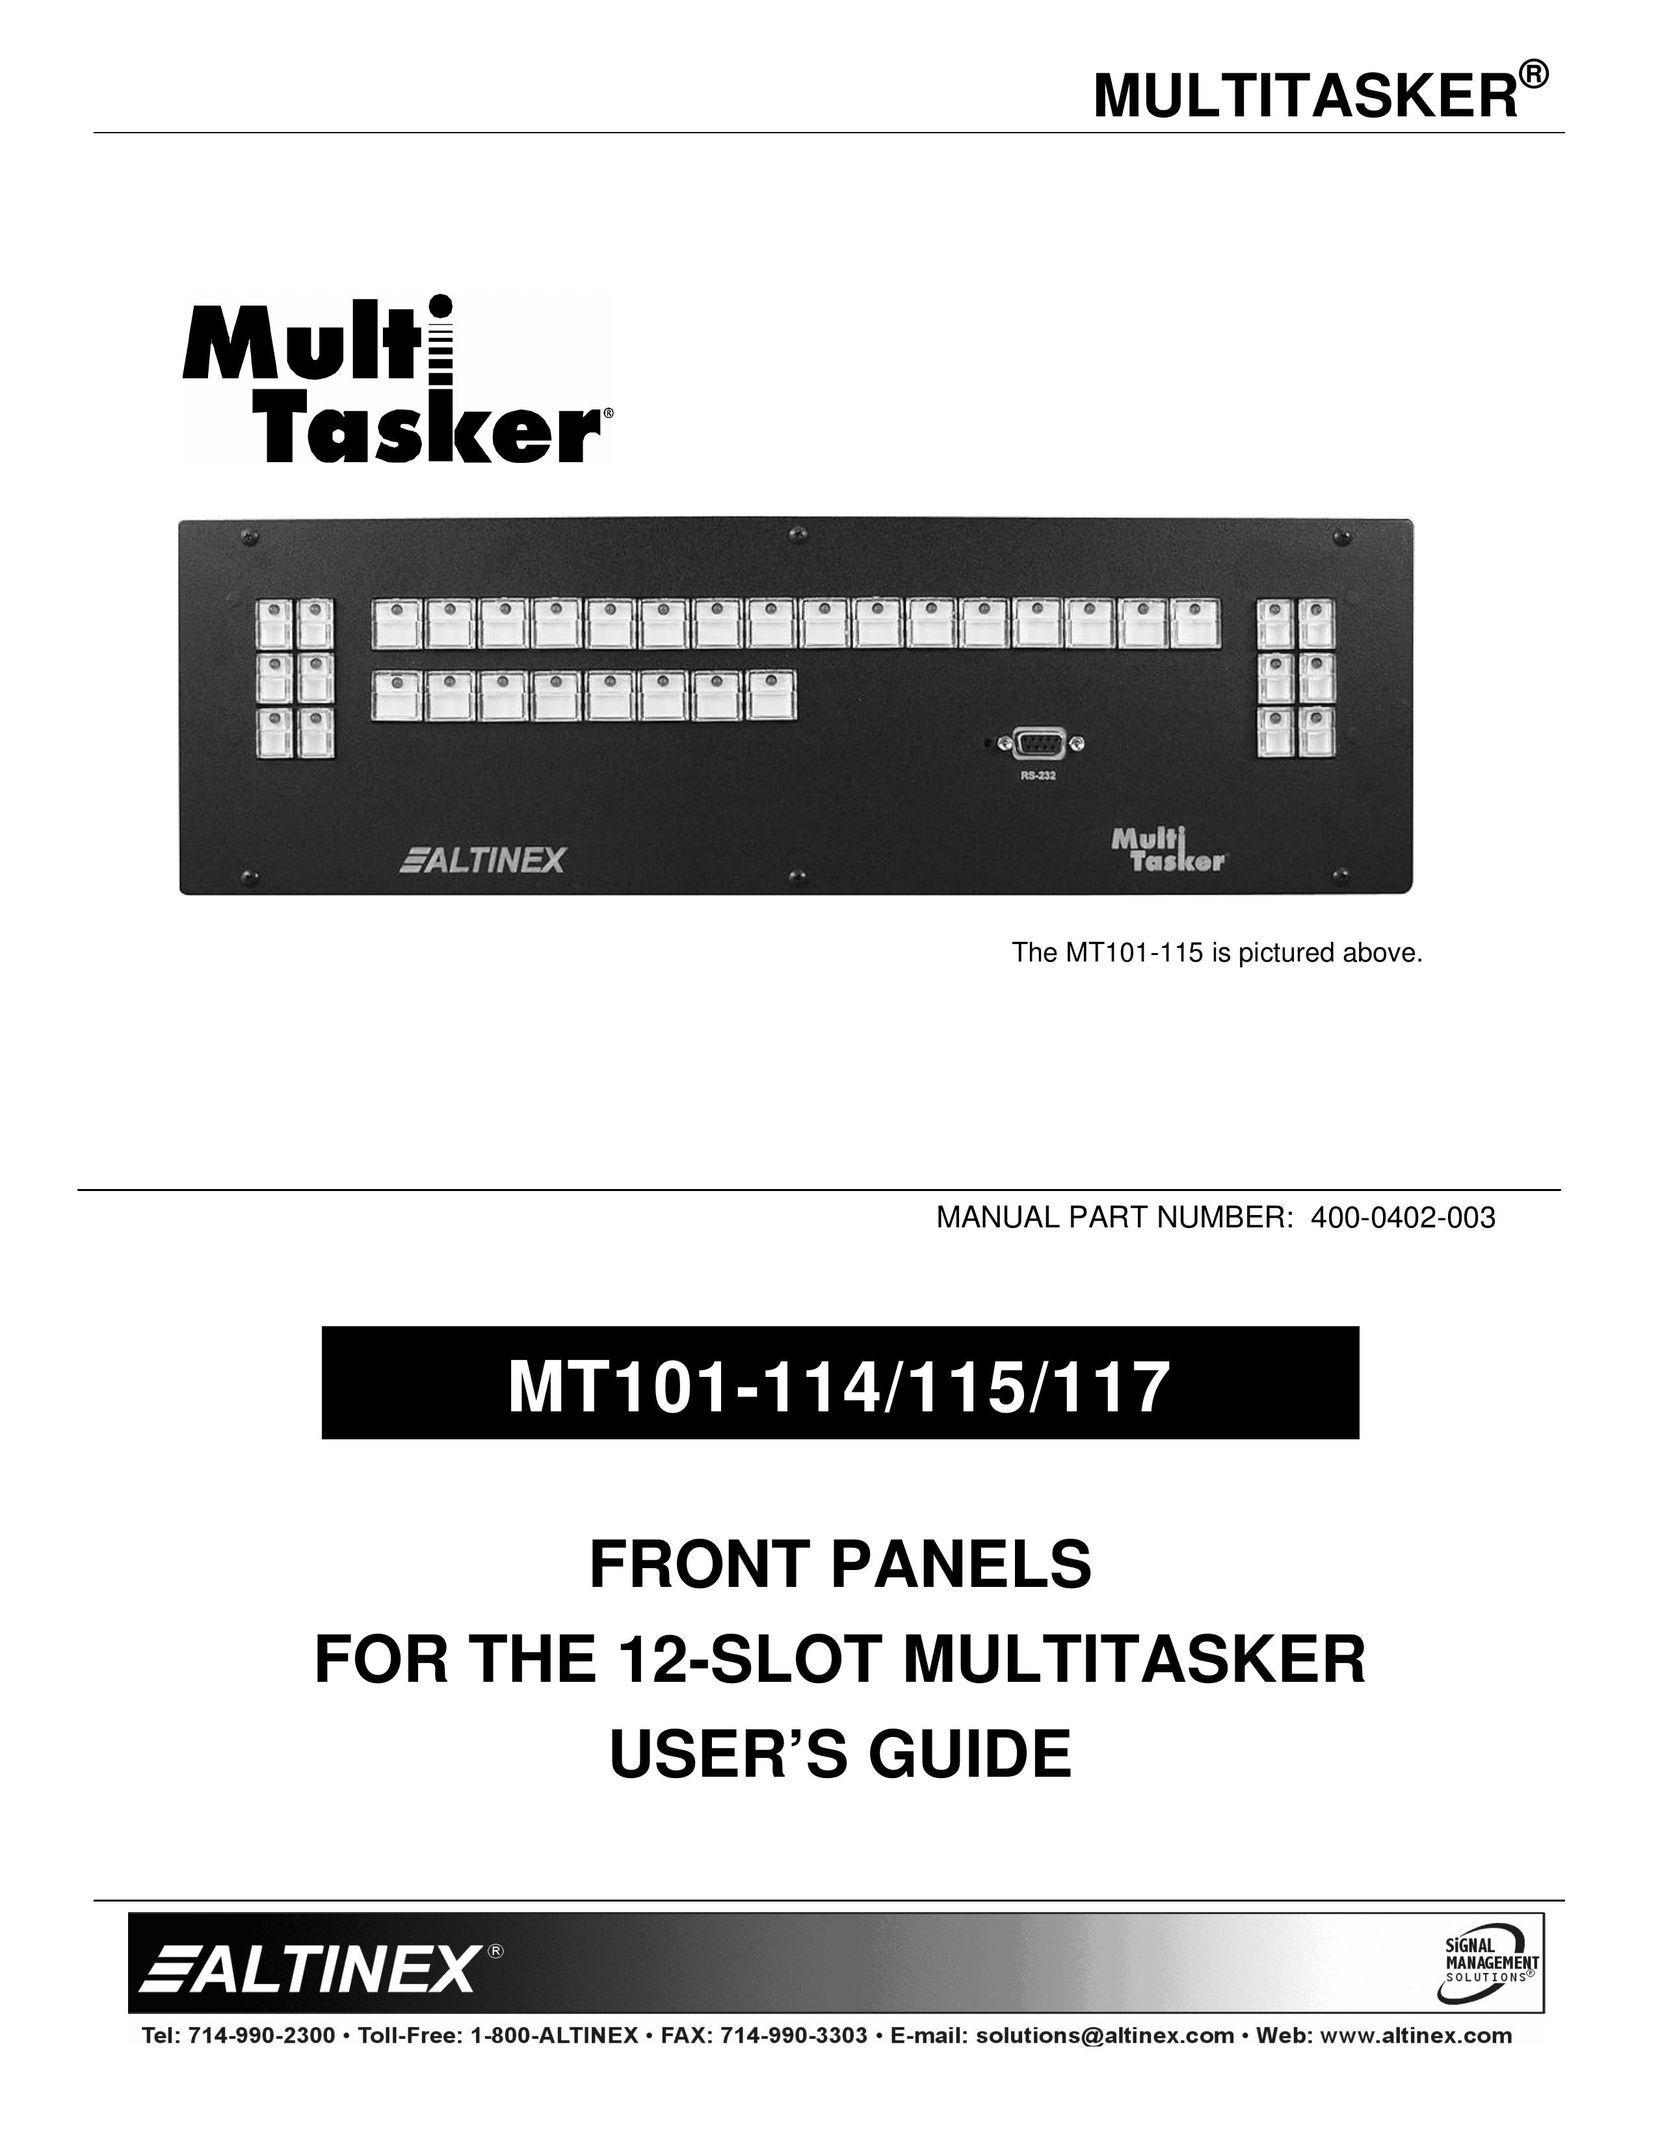 Altinex MT101-115 Network Card User Manual